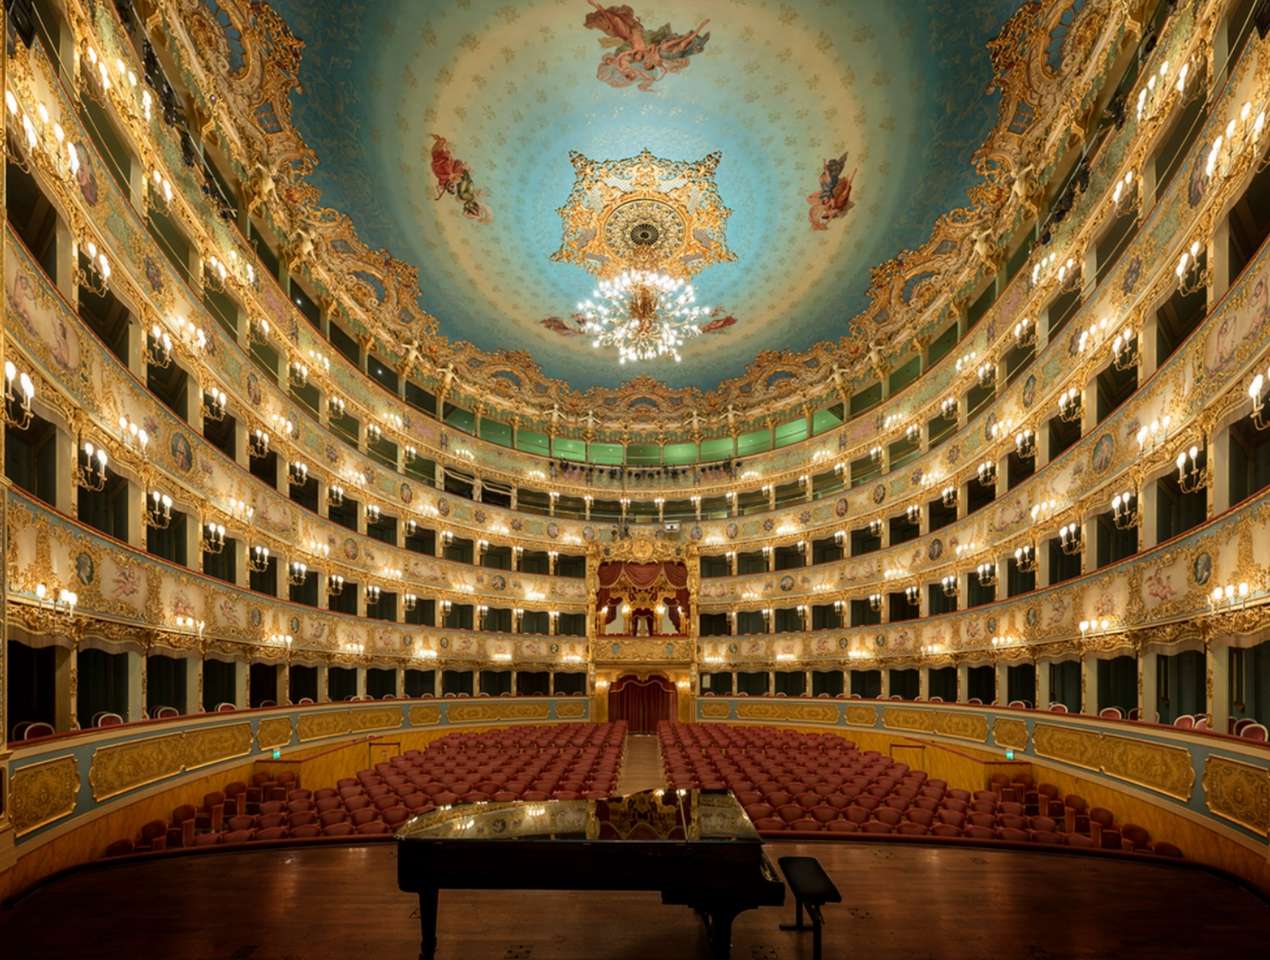 Teatro la fenice puzzle online ze zdjęcia